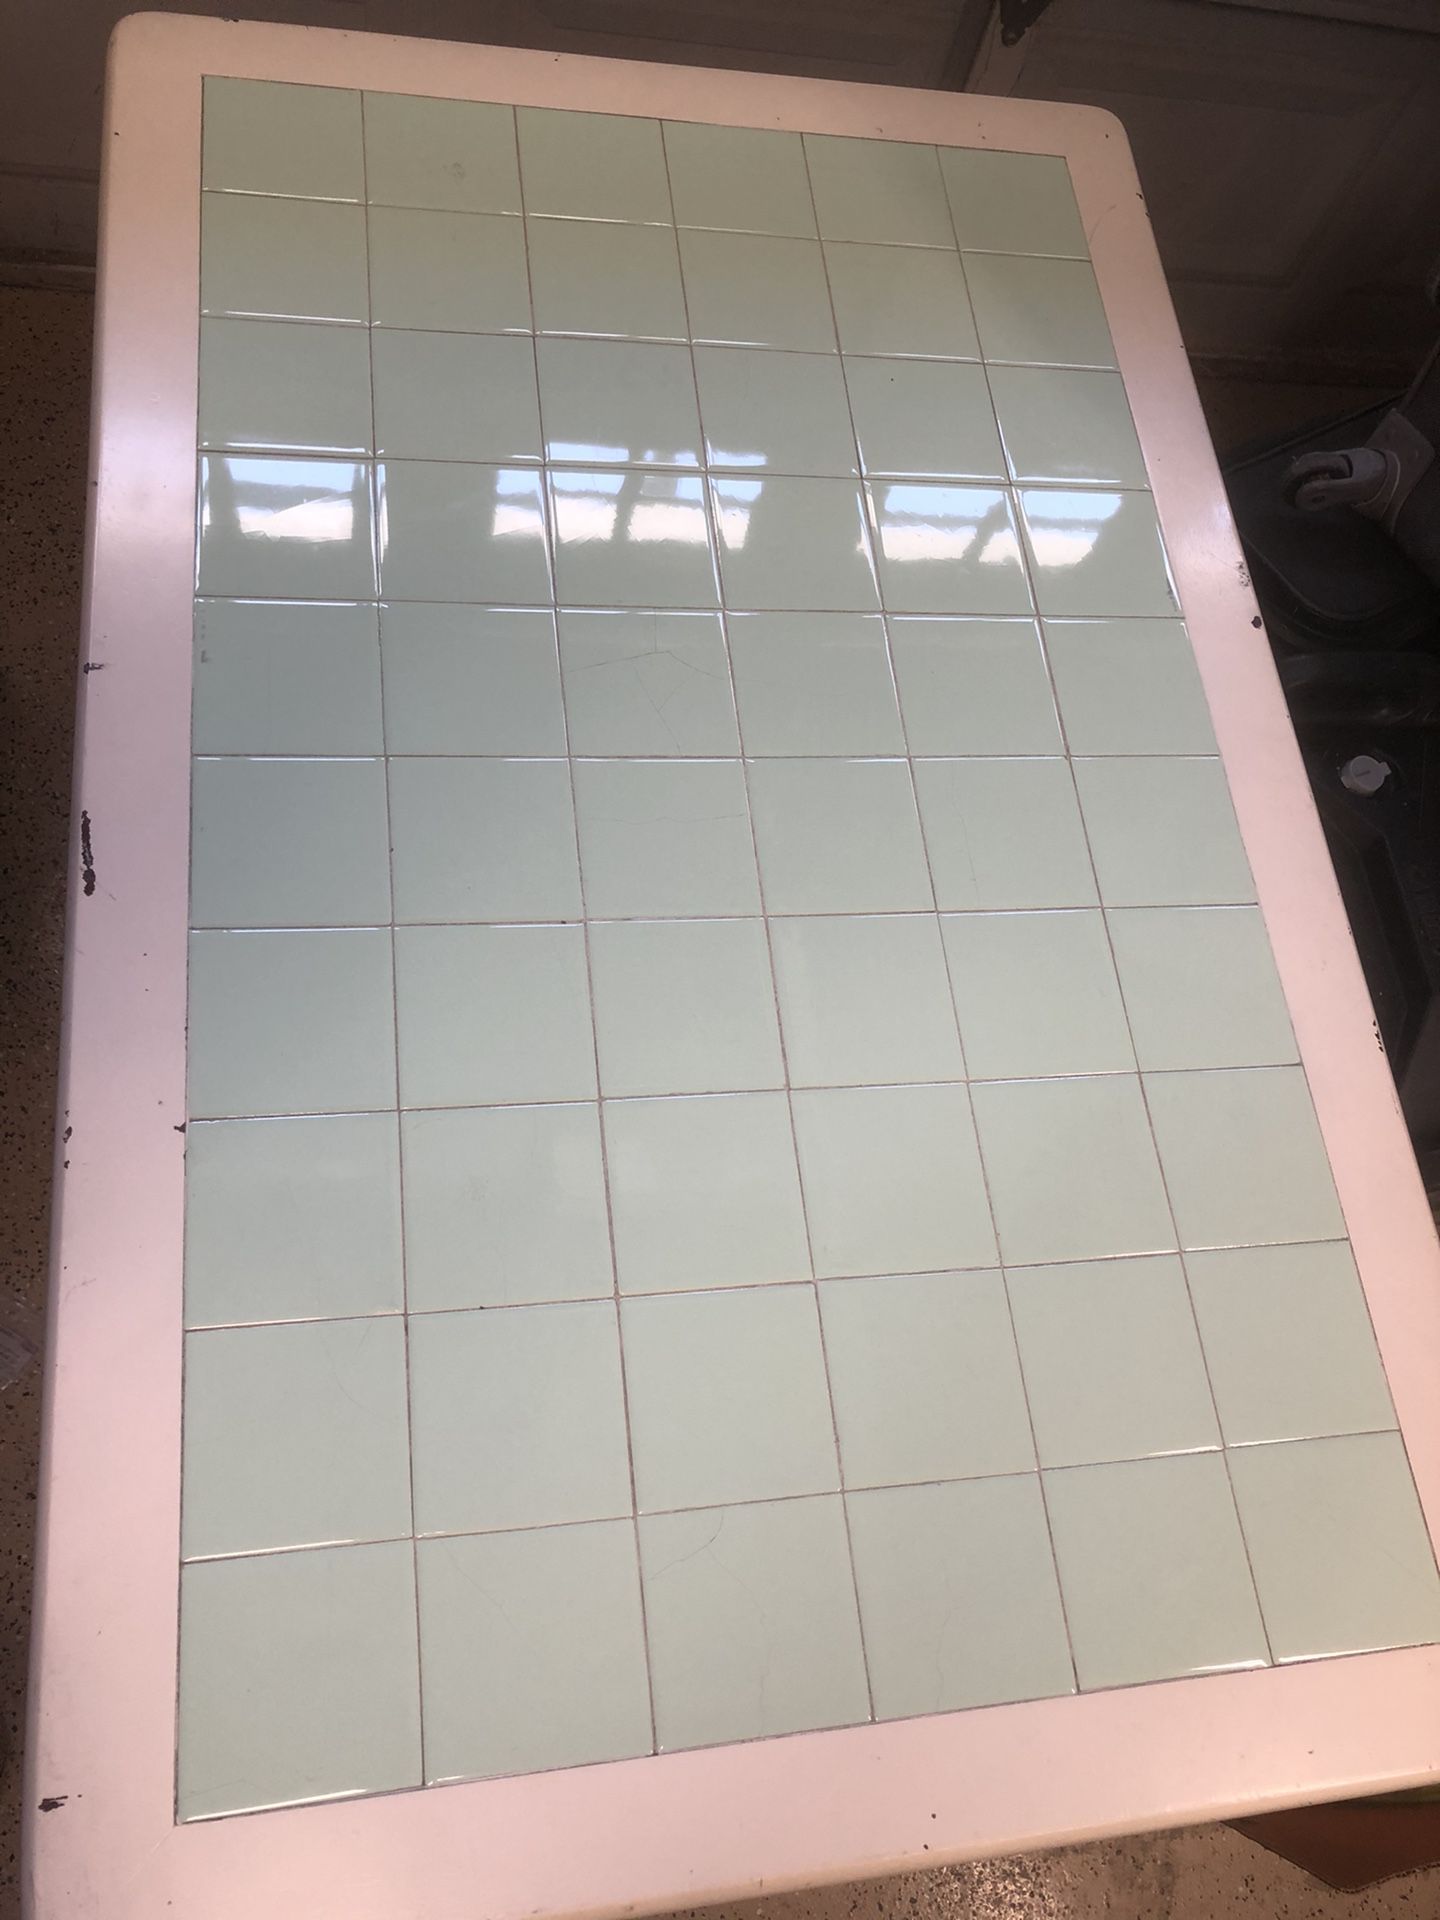 Tiled kitchen table